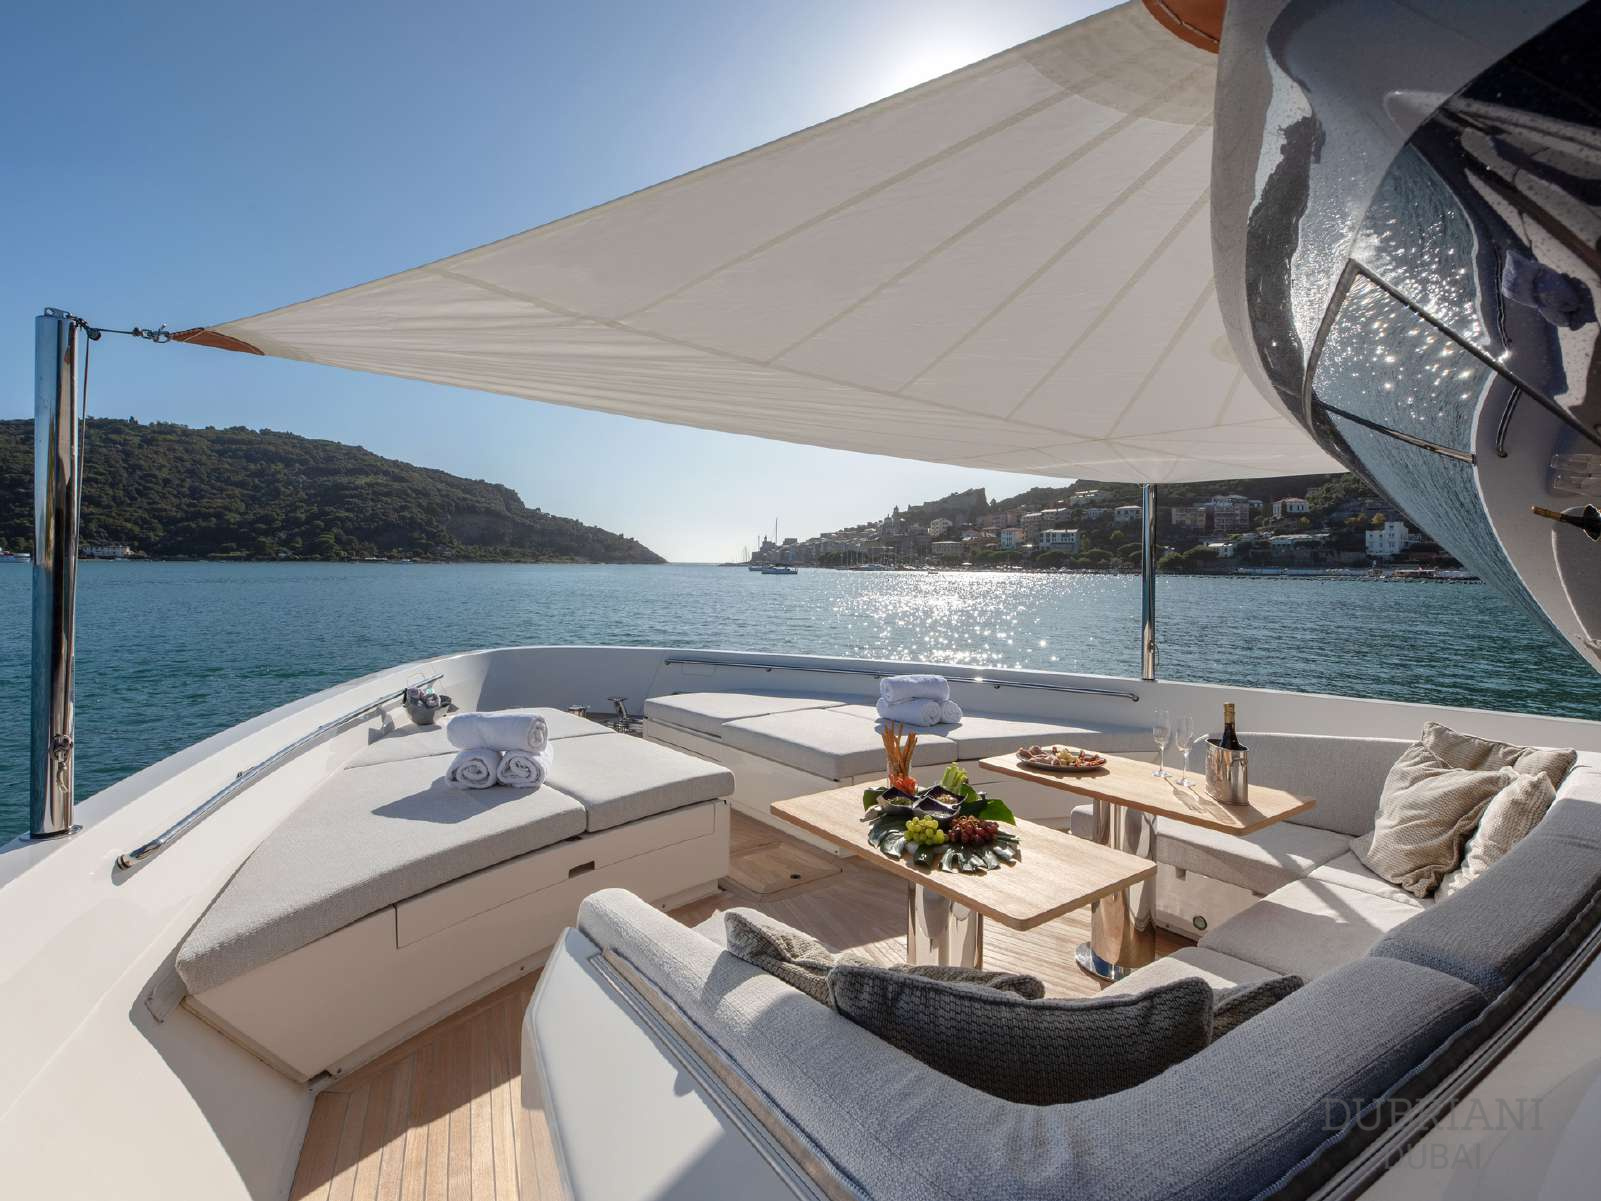 Enjoy 360-degree views of Dubai from the yacht's salon.